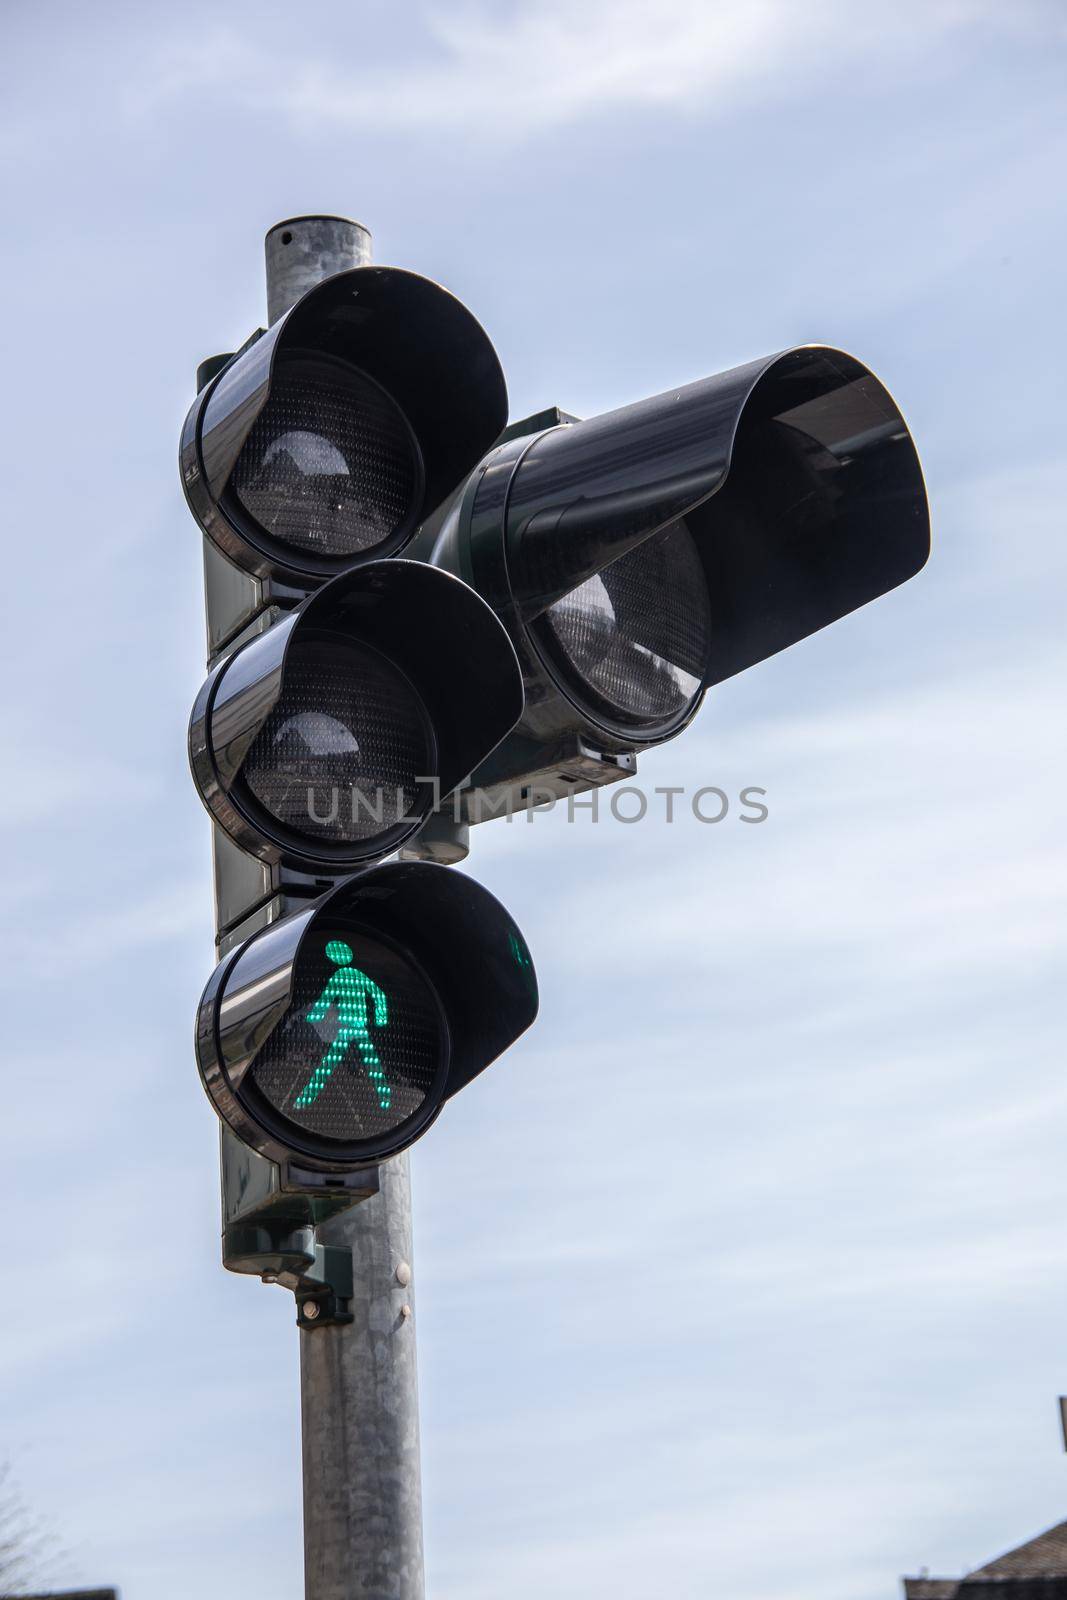 Traffic lights in road traffic for traffic control